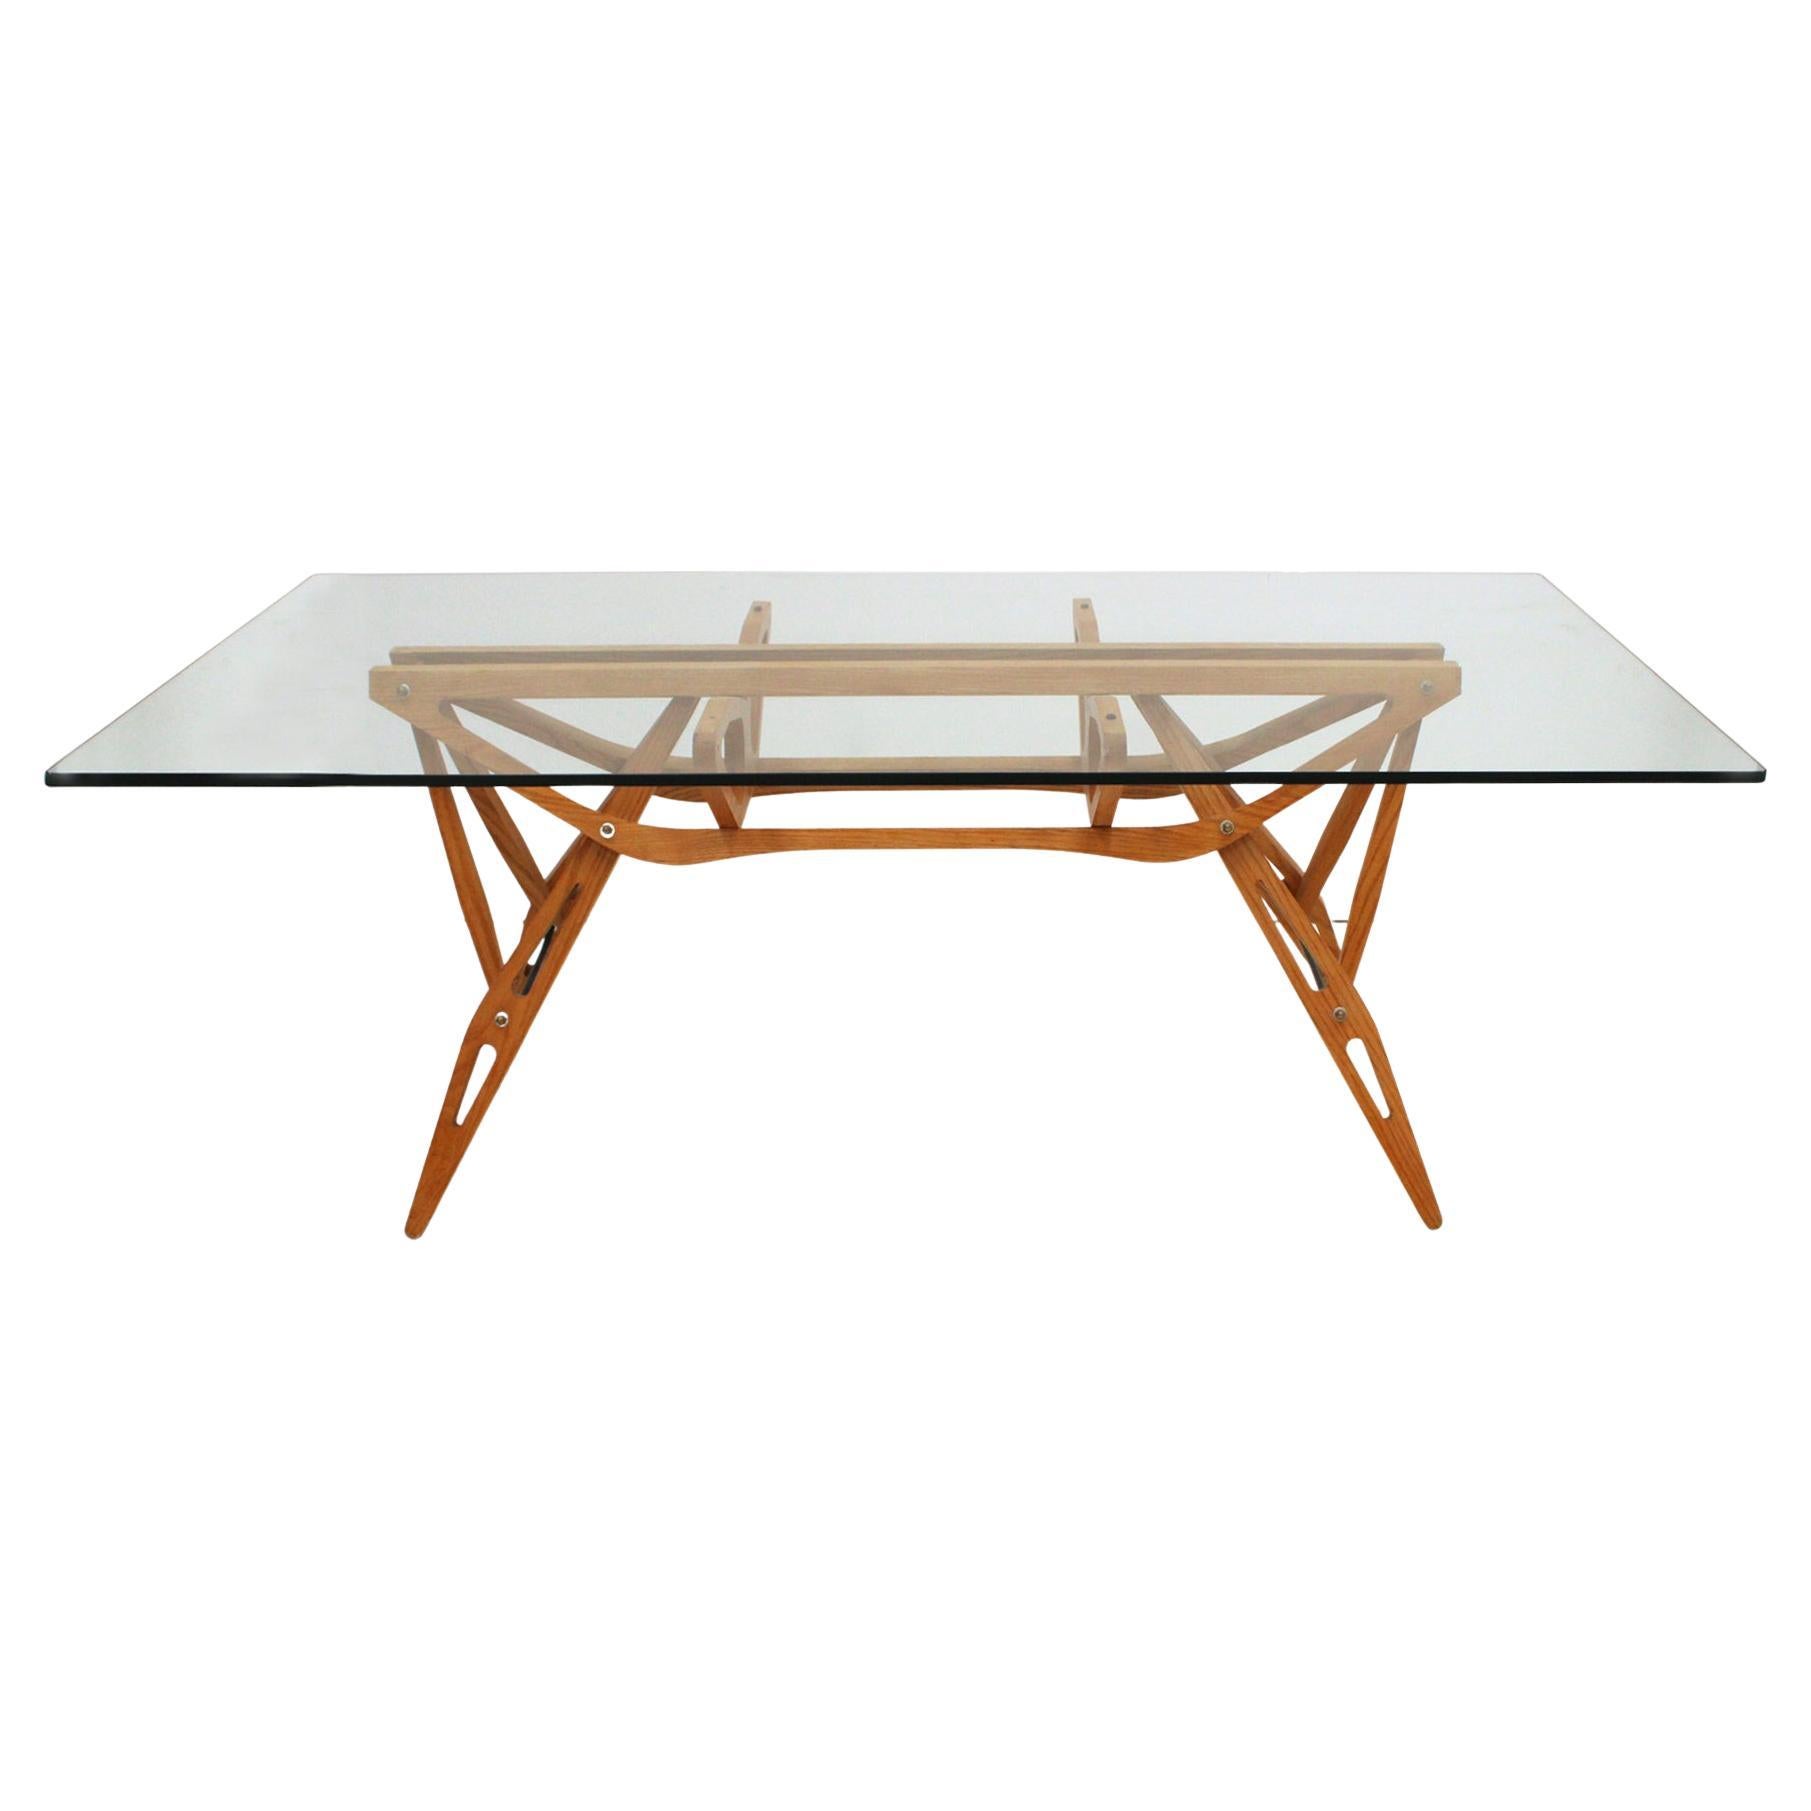 Carlo Mollino Mid-Century Modern Reale Square Italian Table Made of Oak Wood